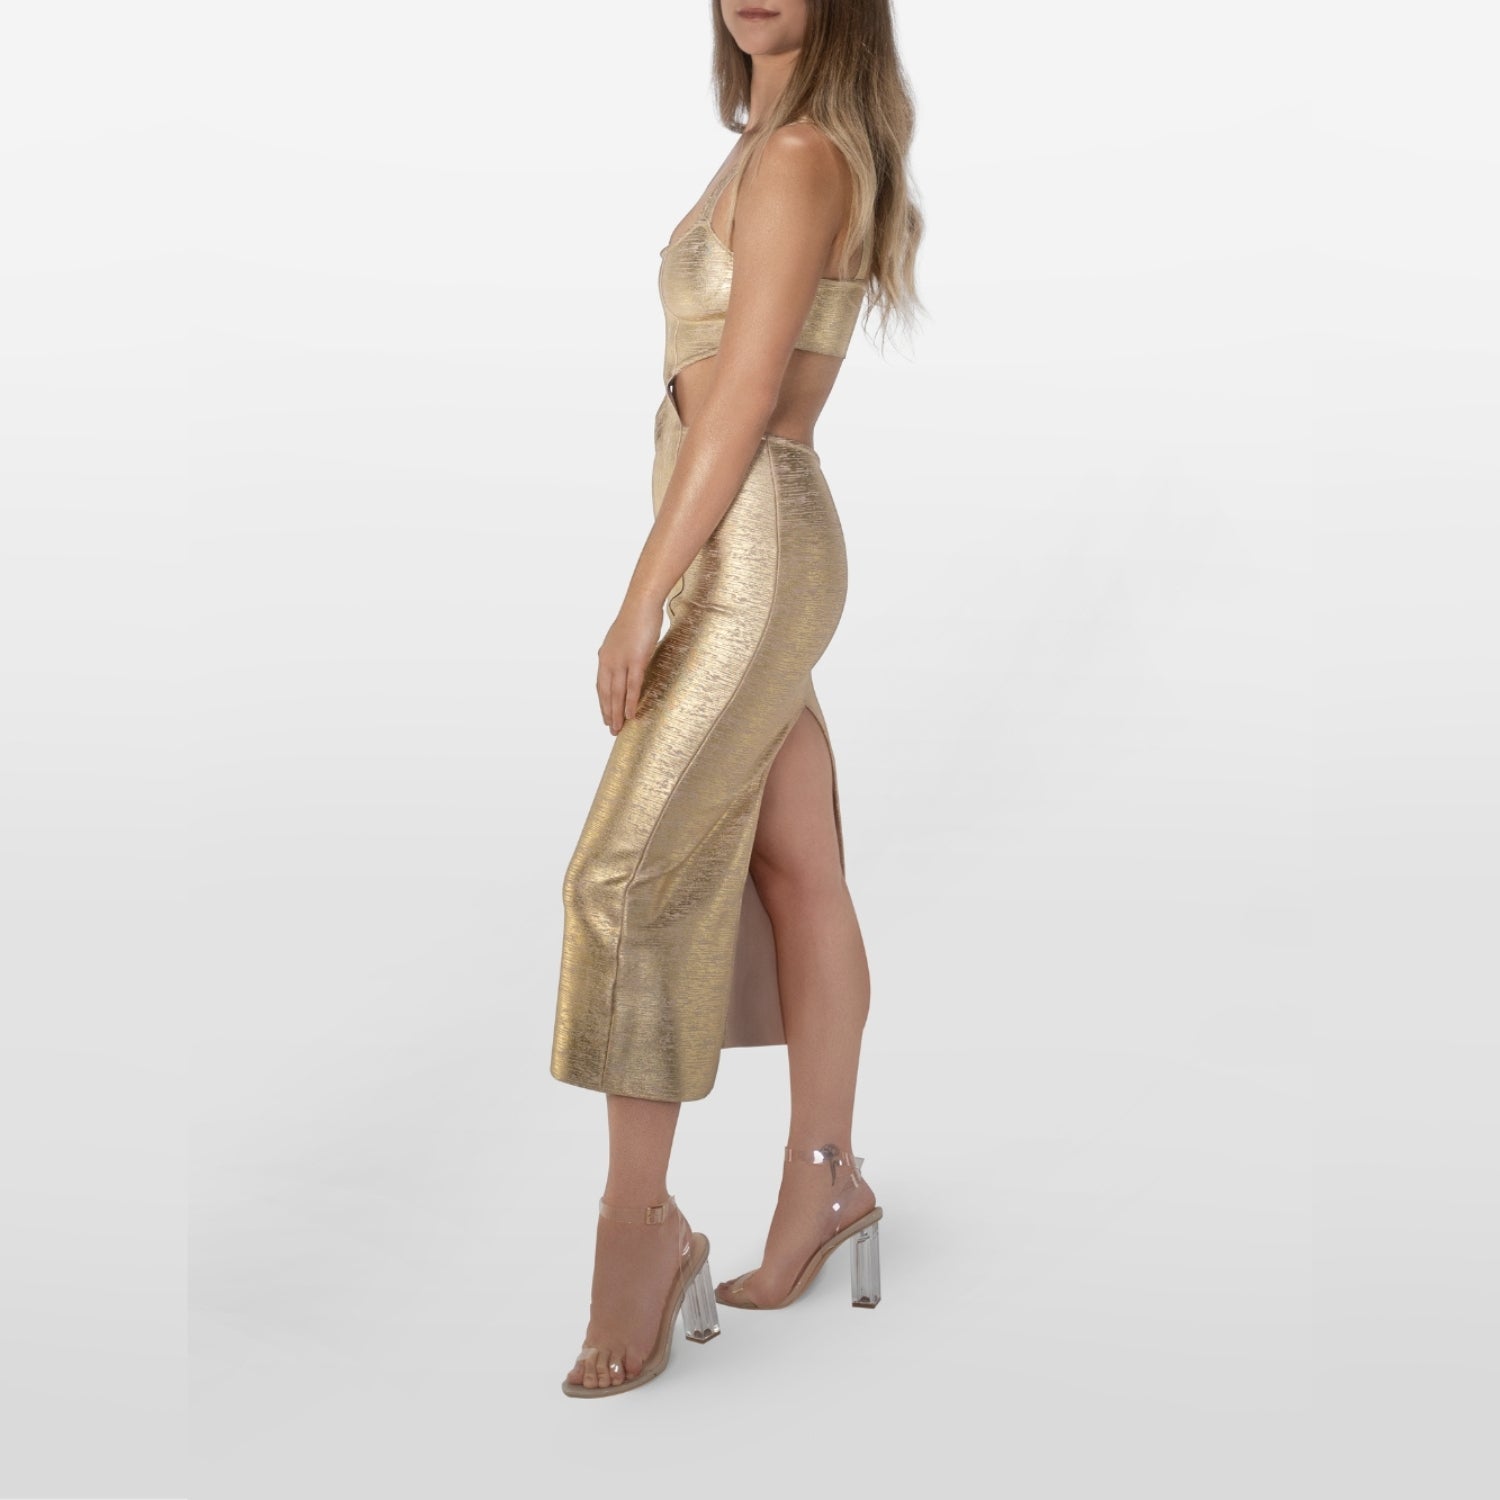 Theia Gold Foil Bandage Dress